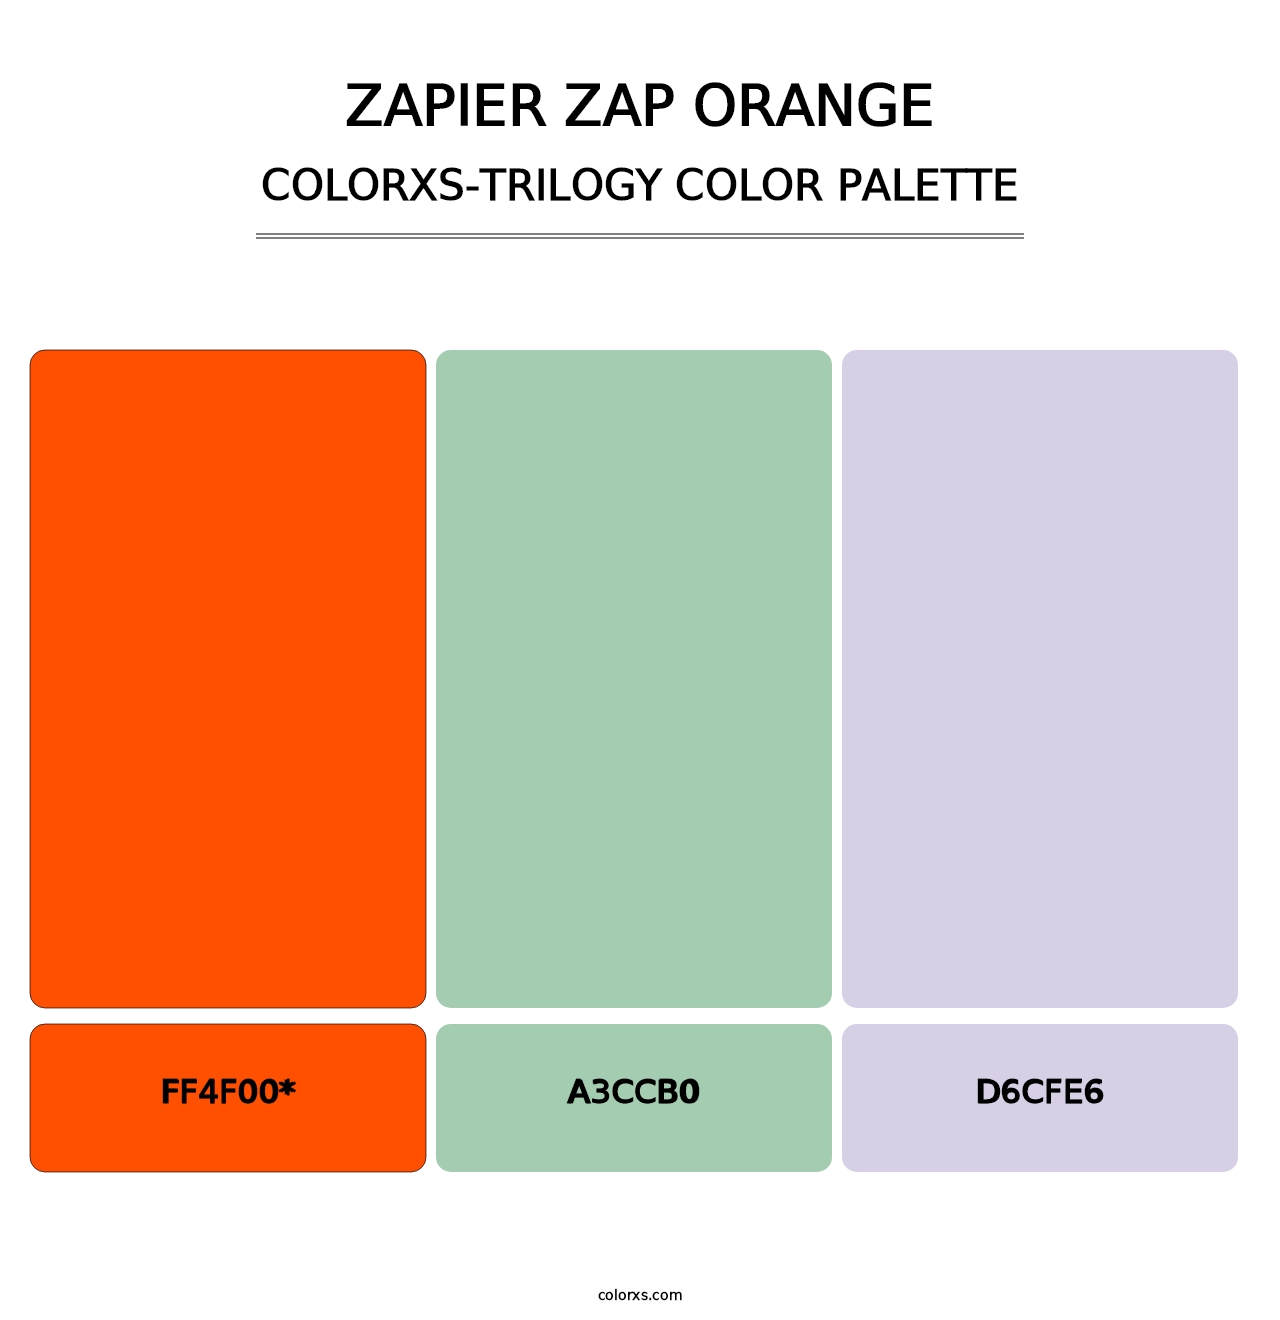 Zapier Zap Orange - Colorxs Trilogy Palette